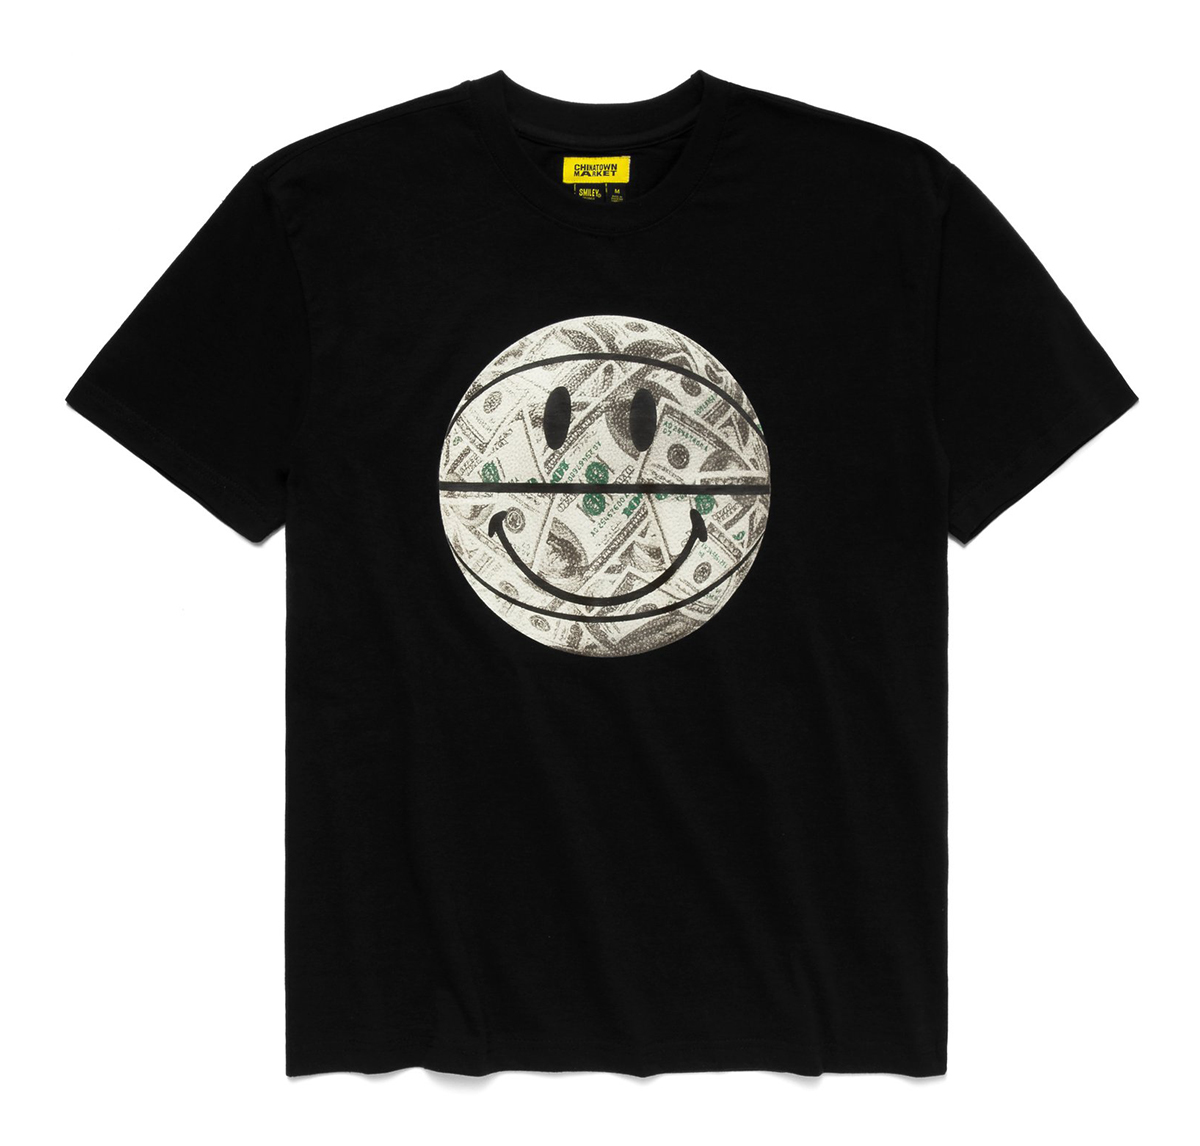 Chinatown Market Smiley Money Ball Shirt - Black front